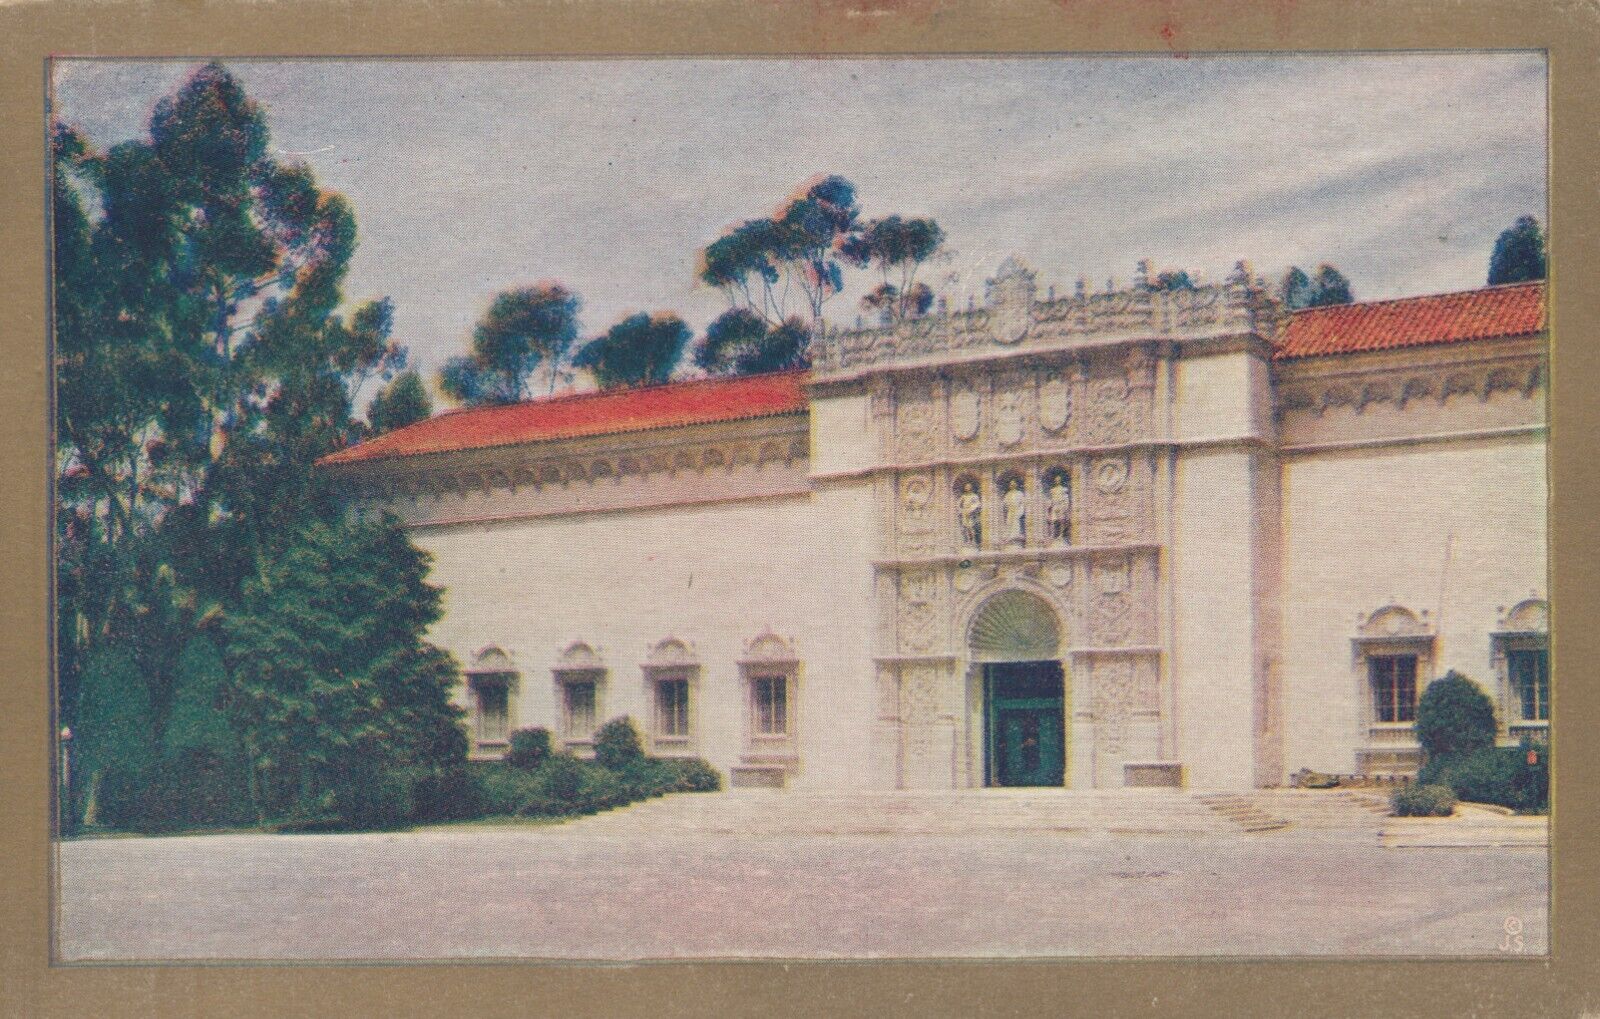 Entrance San Diego California Fine Arts Gallery Whiteborder Vintage Postcard